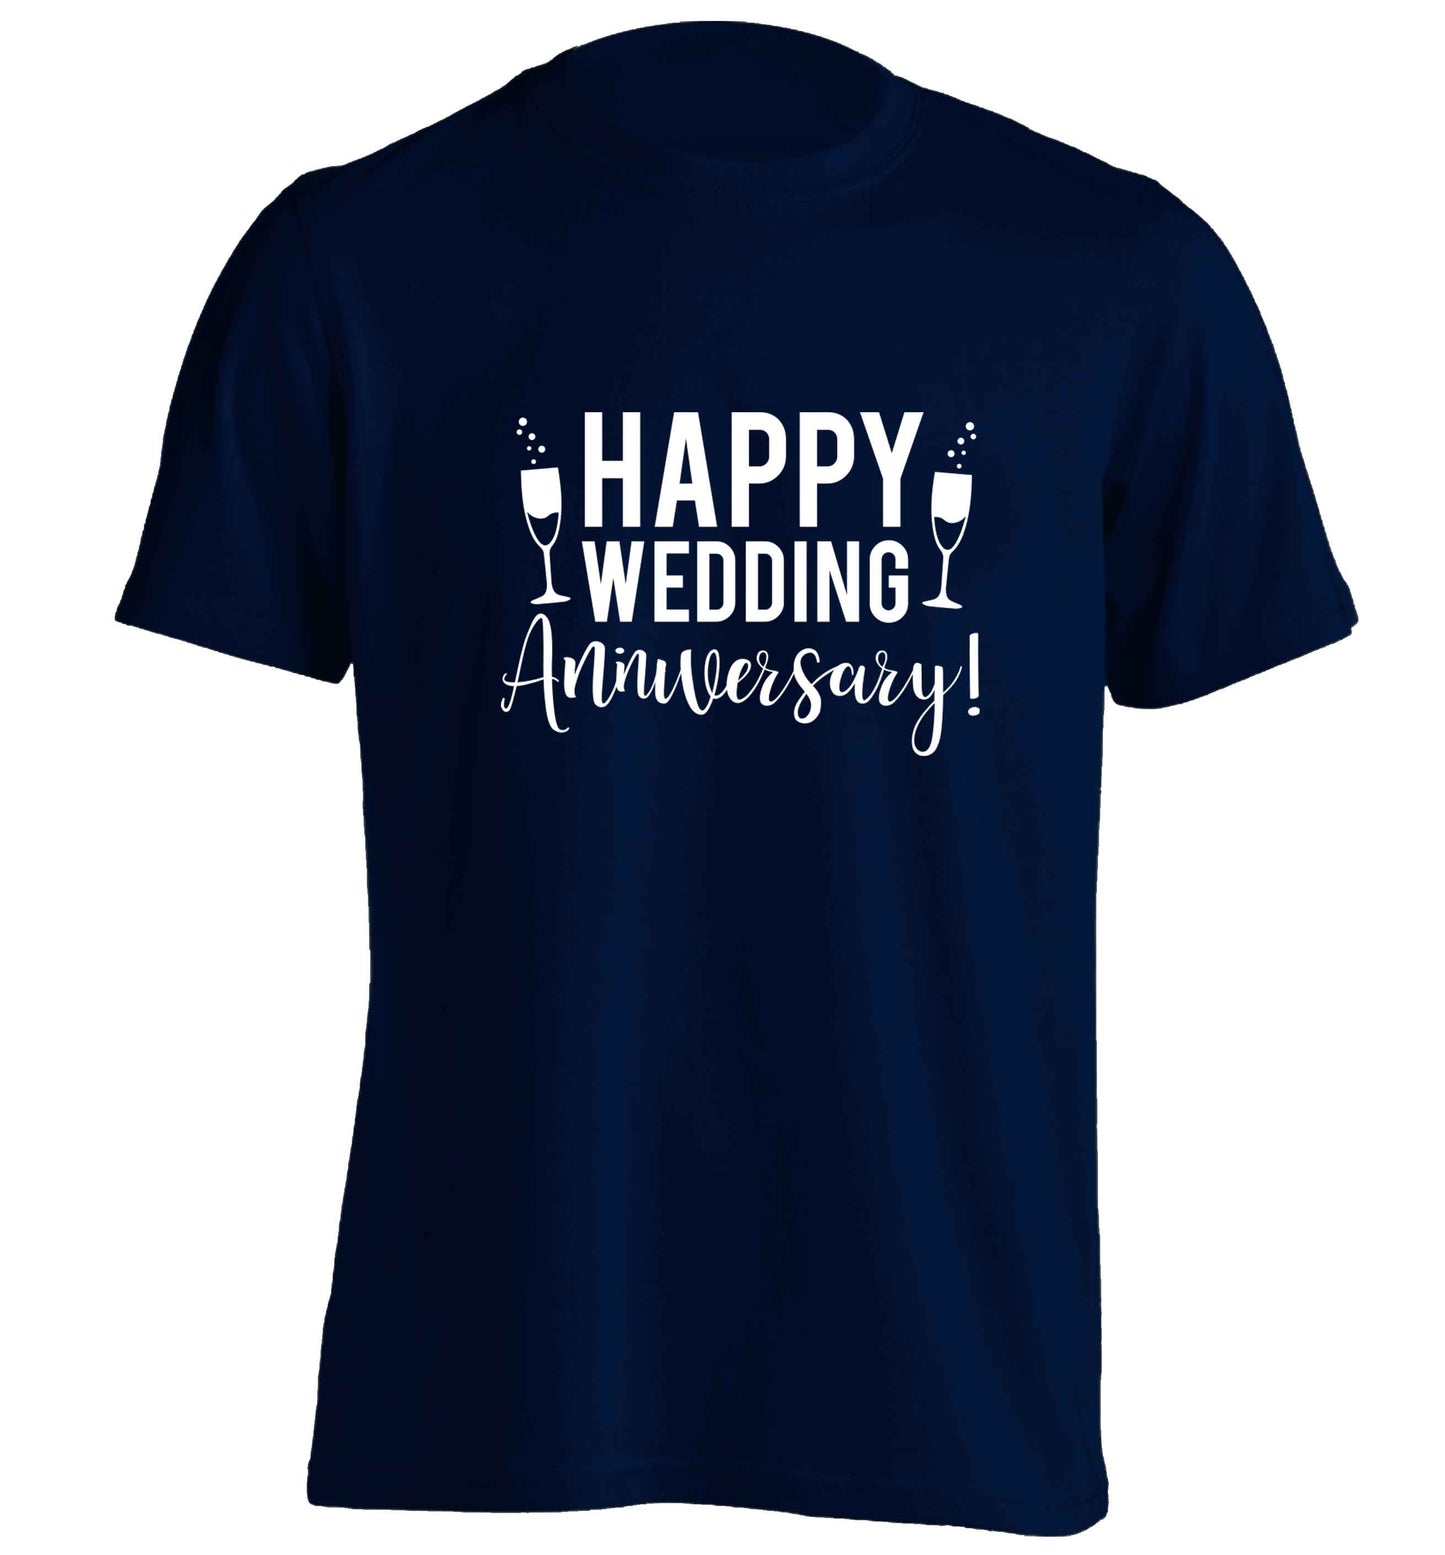 Happy wedding anniversary! adults unisex navy Tshirt 2XL